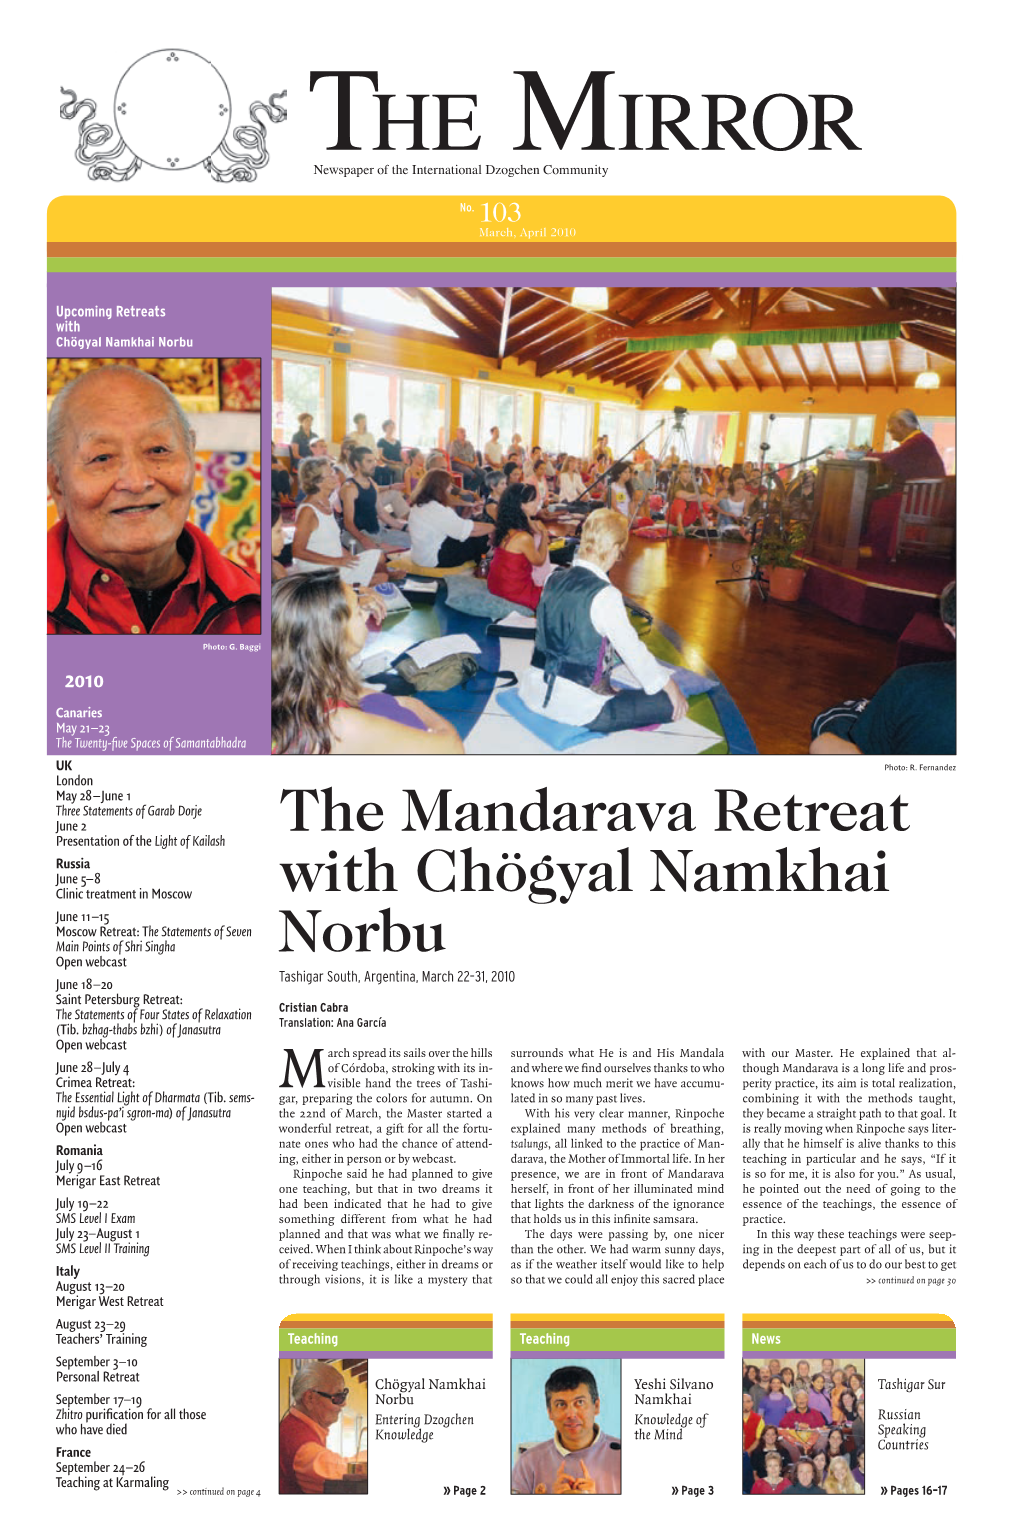 The Mandarava Retreat with Chögyal Namkhai Norbu